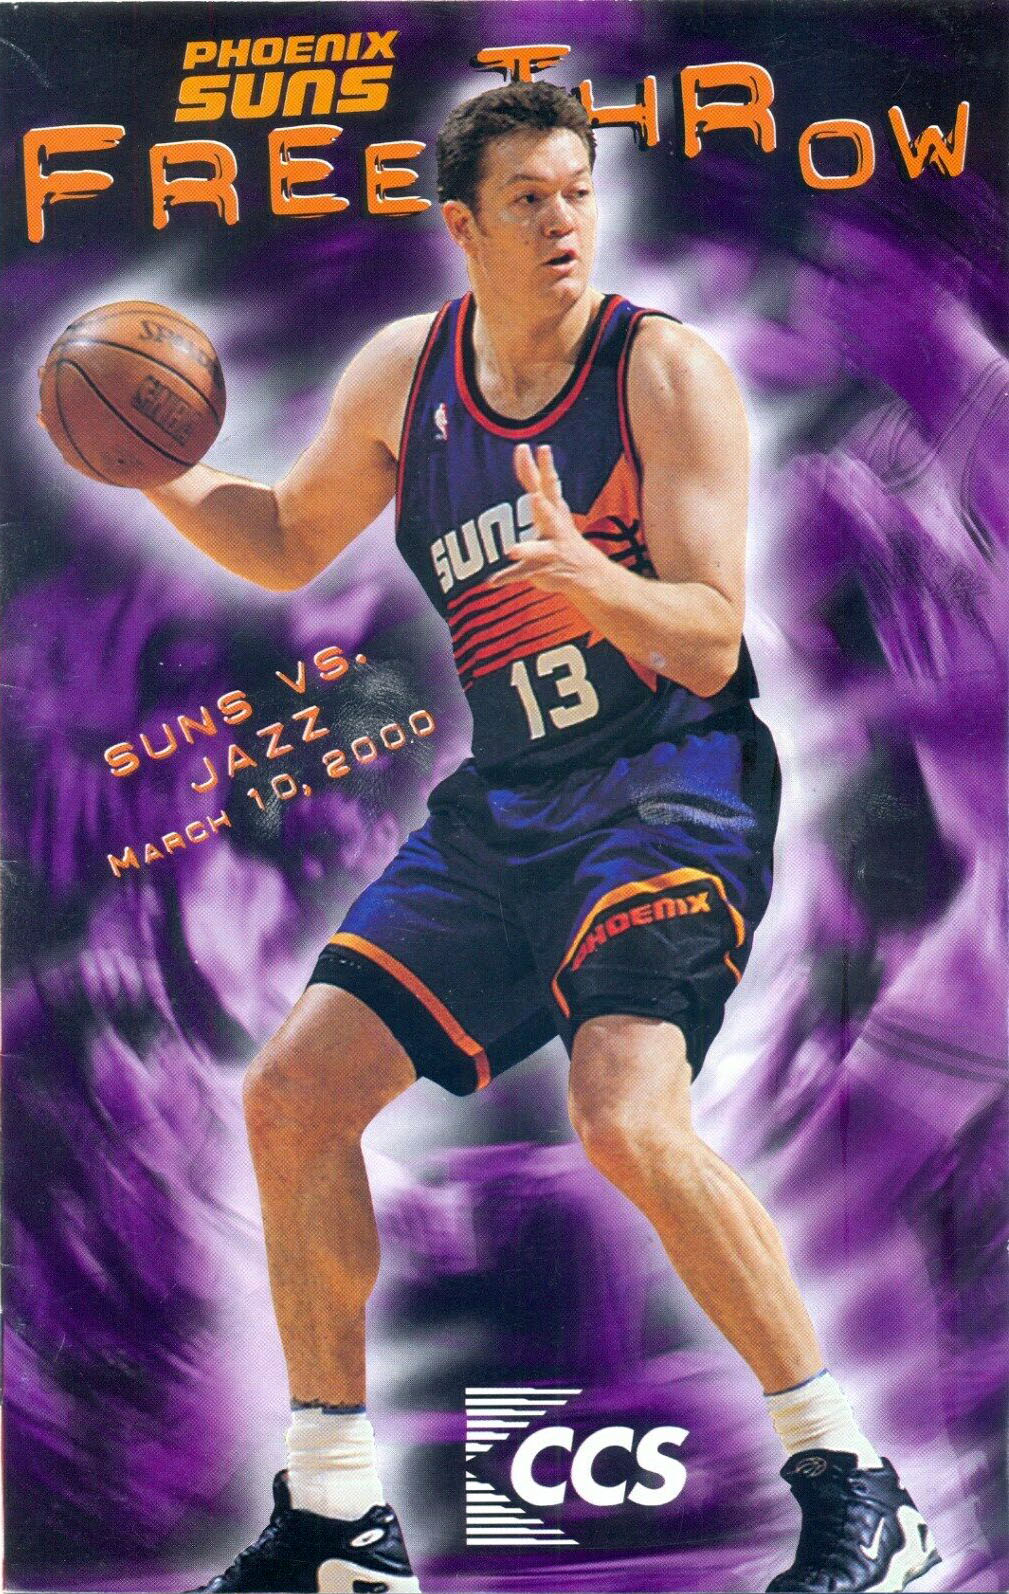 1999-2000 Phoenix Suns program